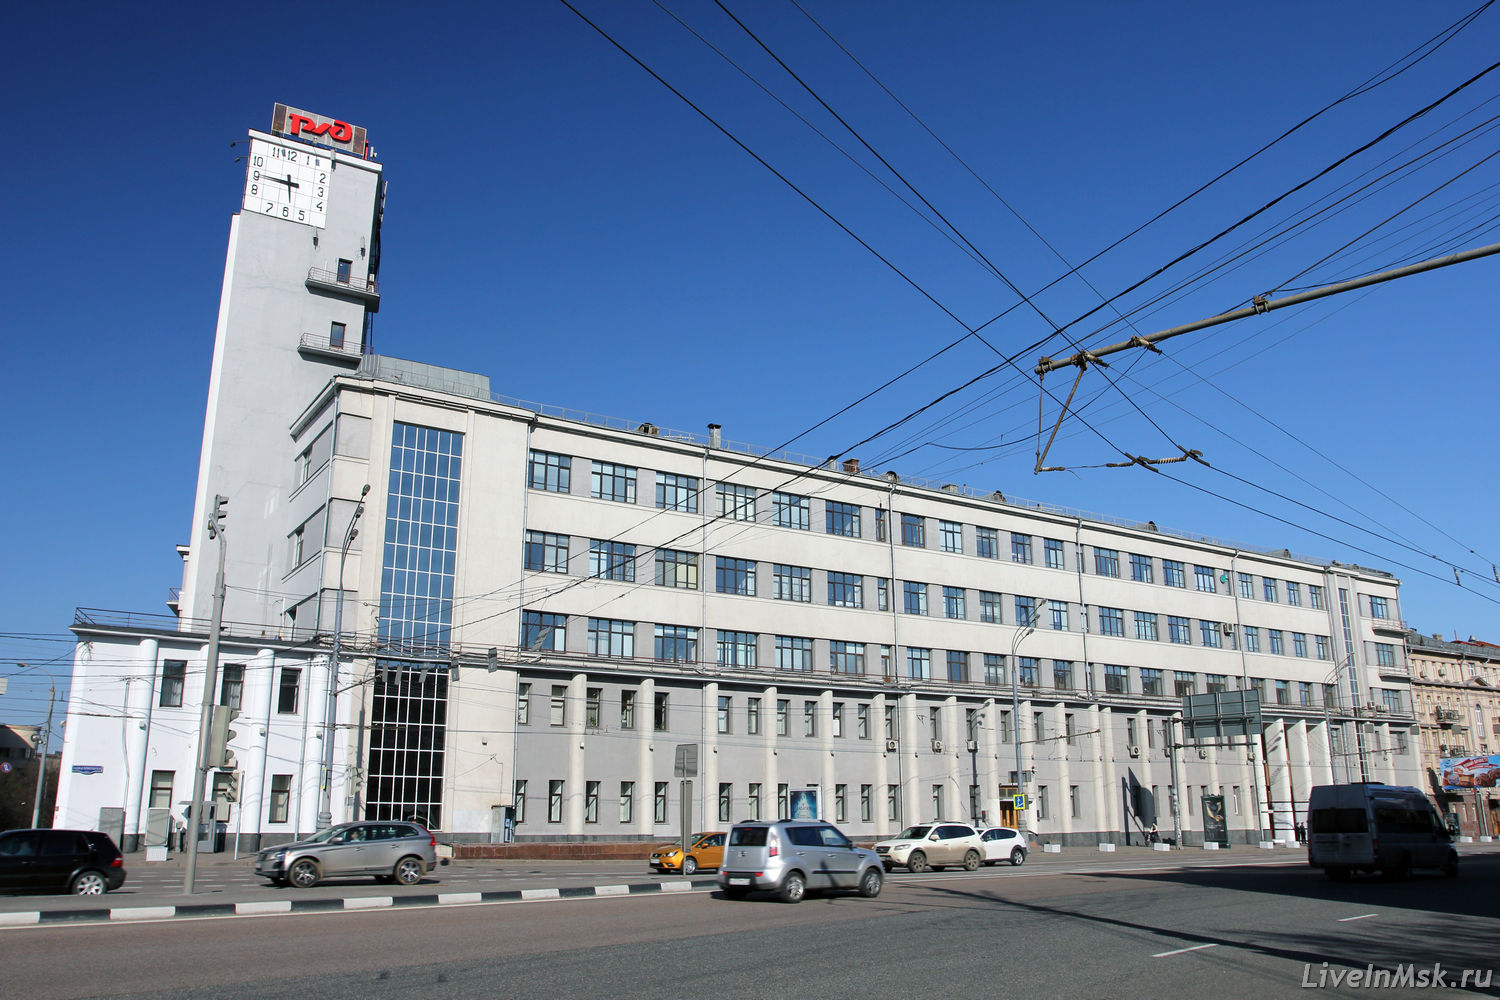 Здание РЖД, фото 2012 года